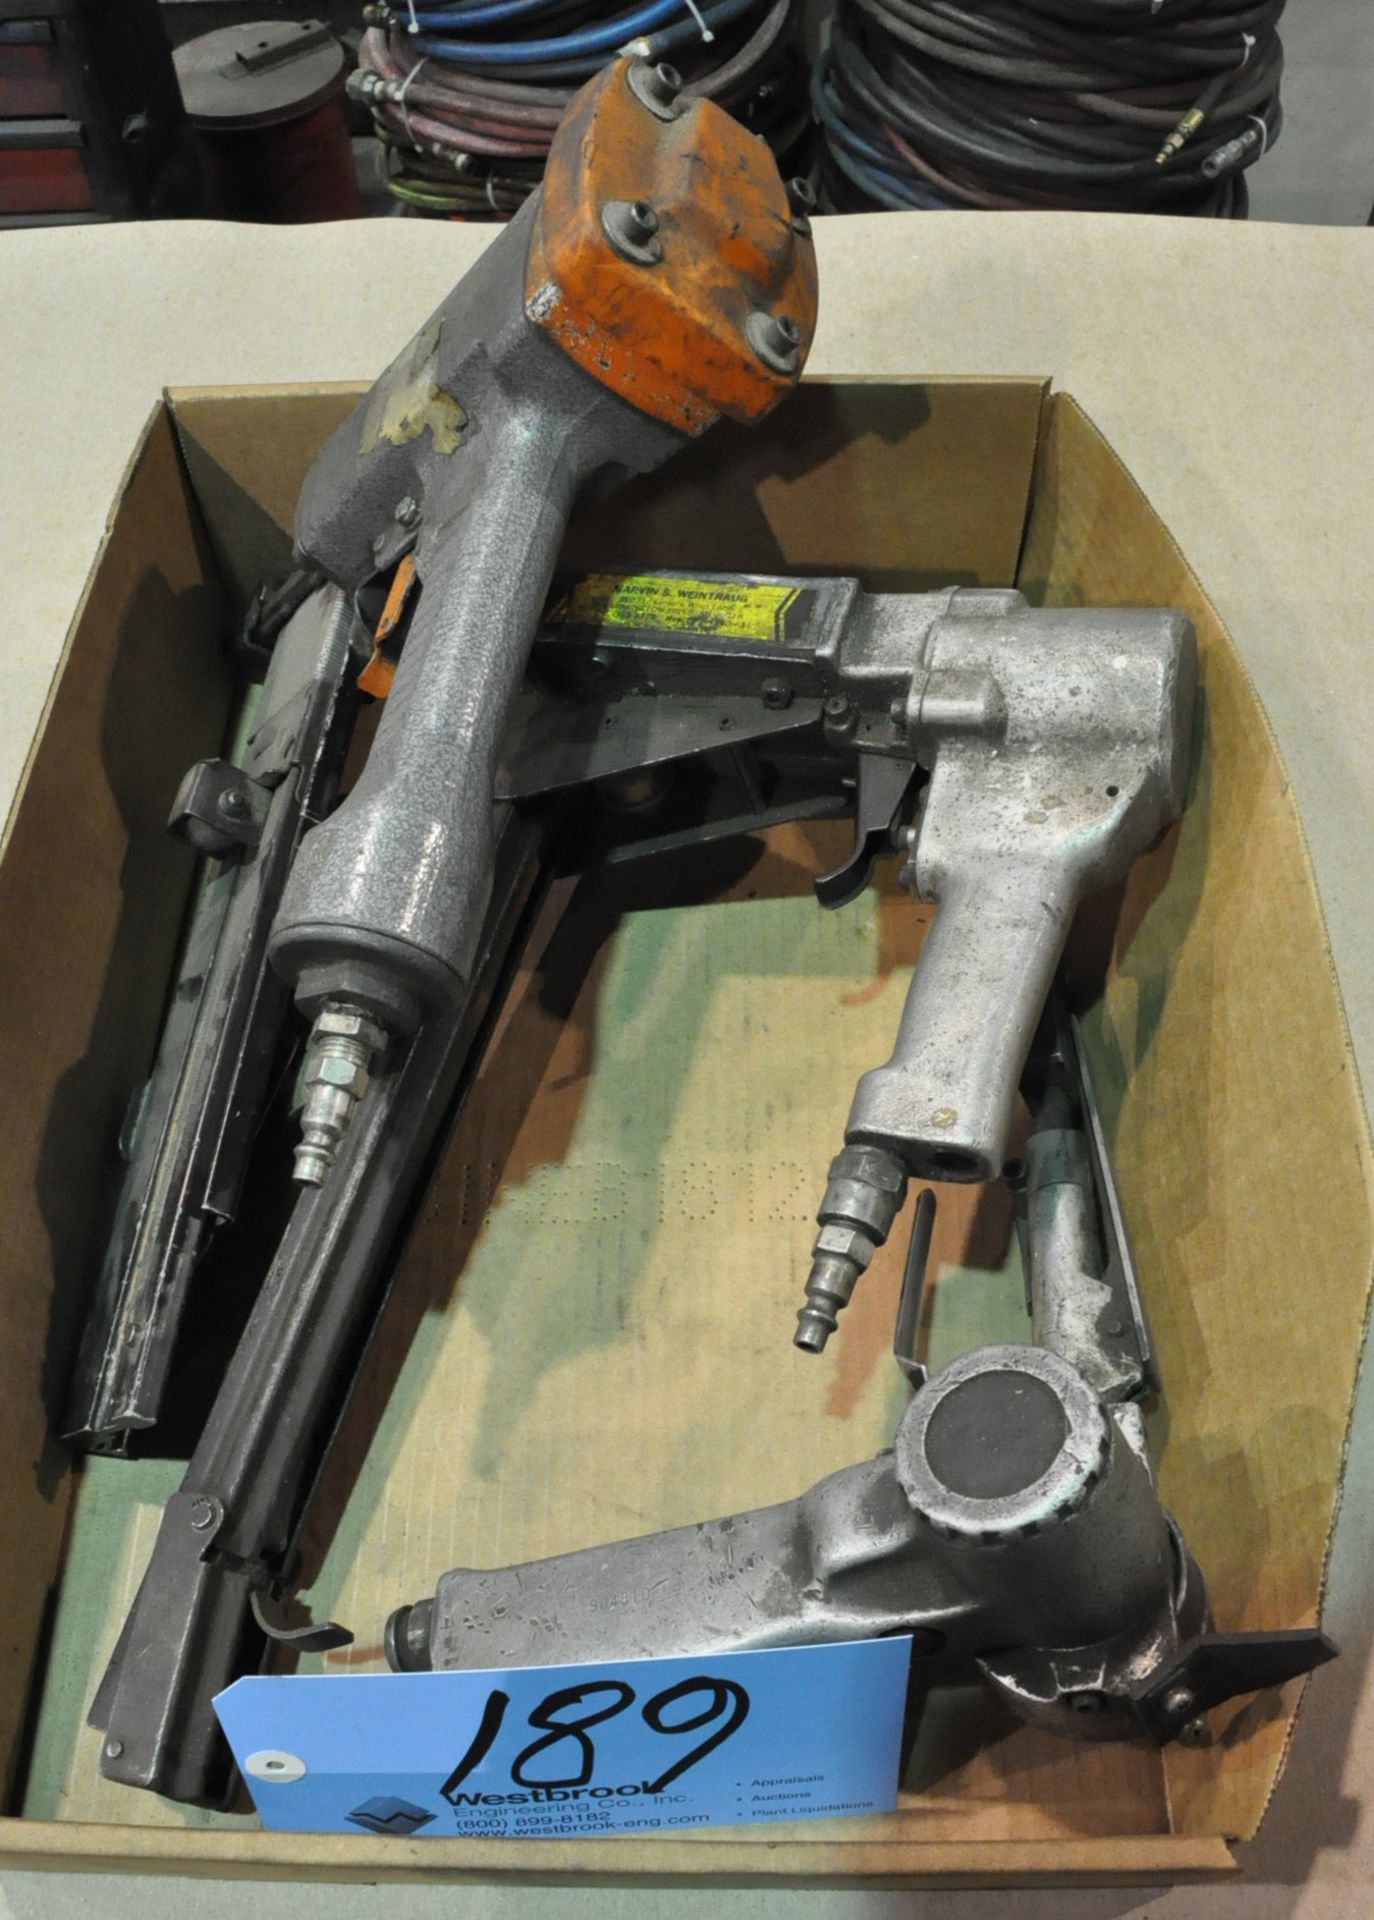 Lot-(2) No Name Pneumatic Box Stapler Guns and (1) 1/2" Pneumatic Belt Sander in (1) Box